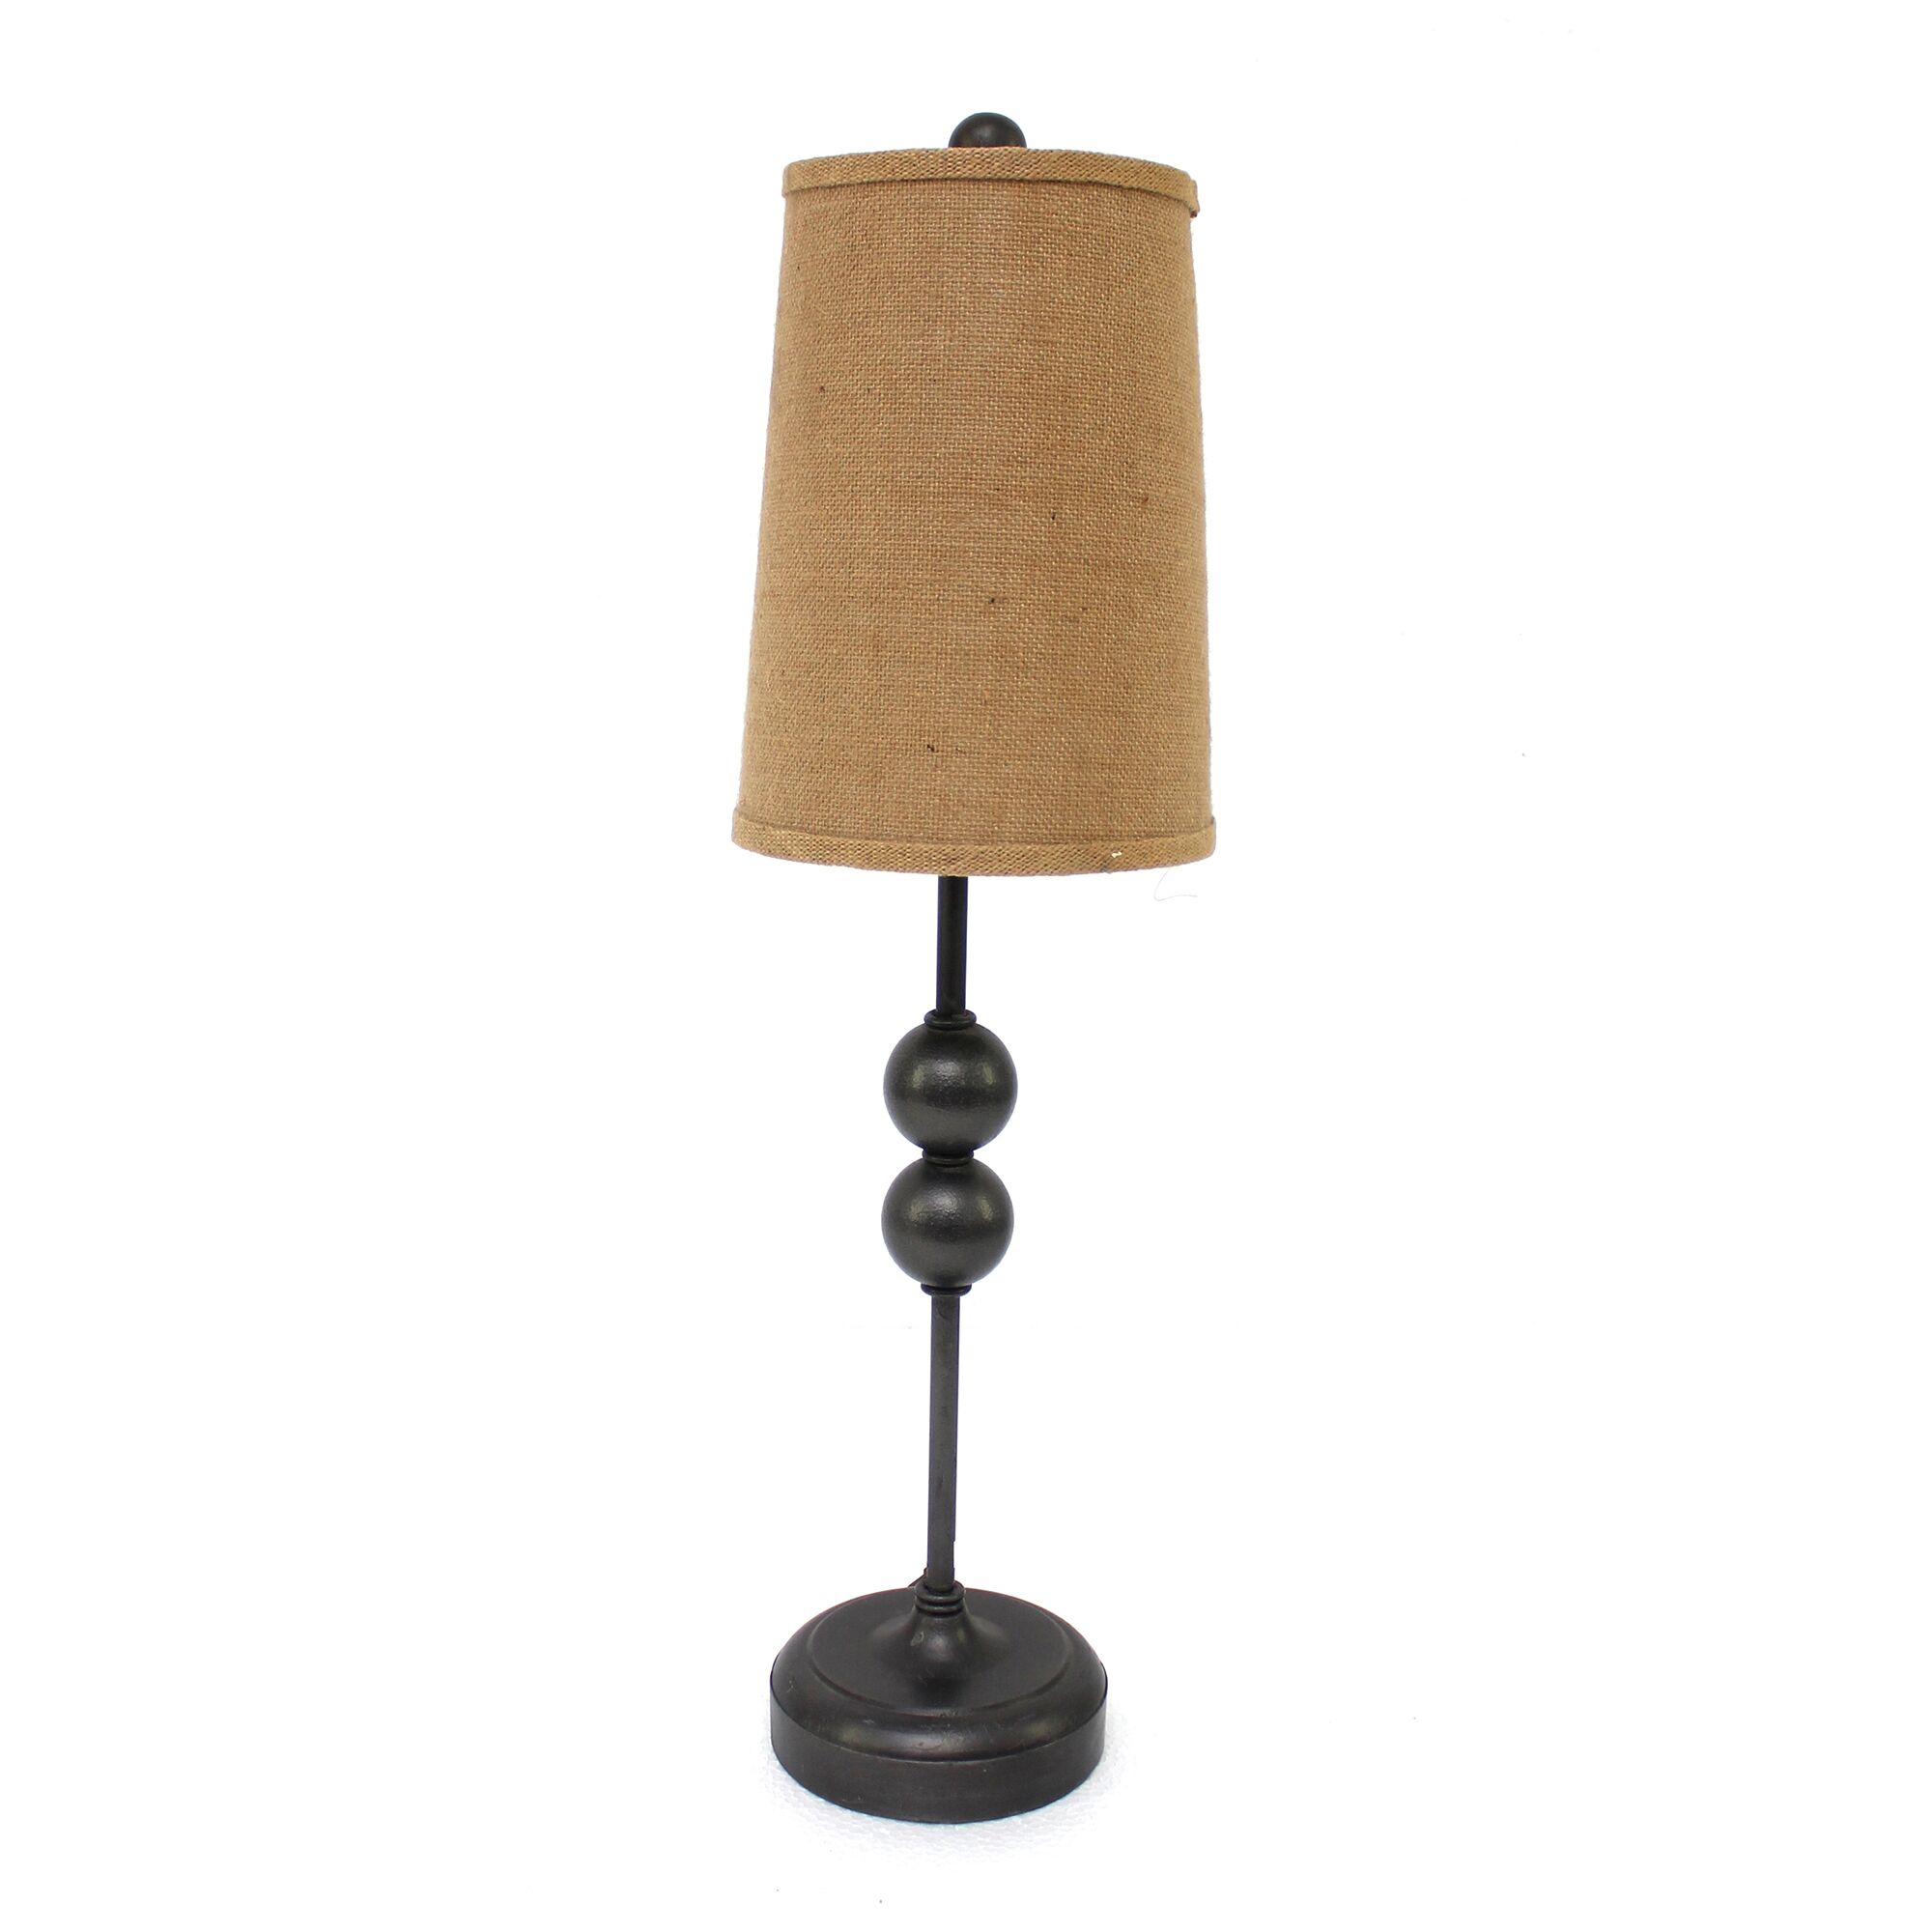 8" x 7" x 29" Bronze, Minimalist - Accent Table Lamp